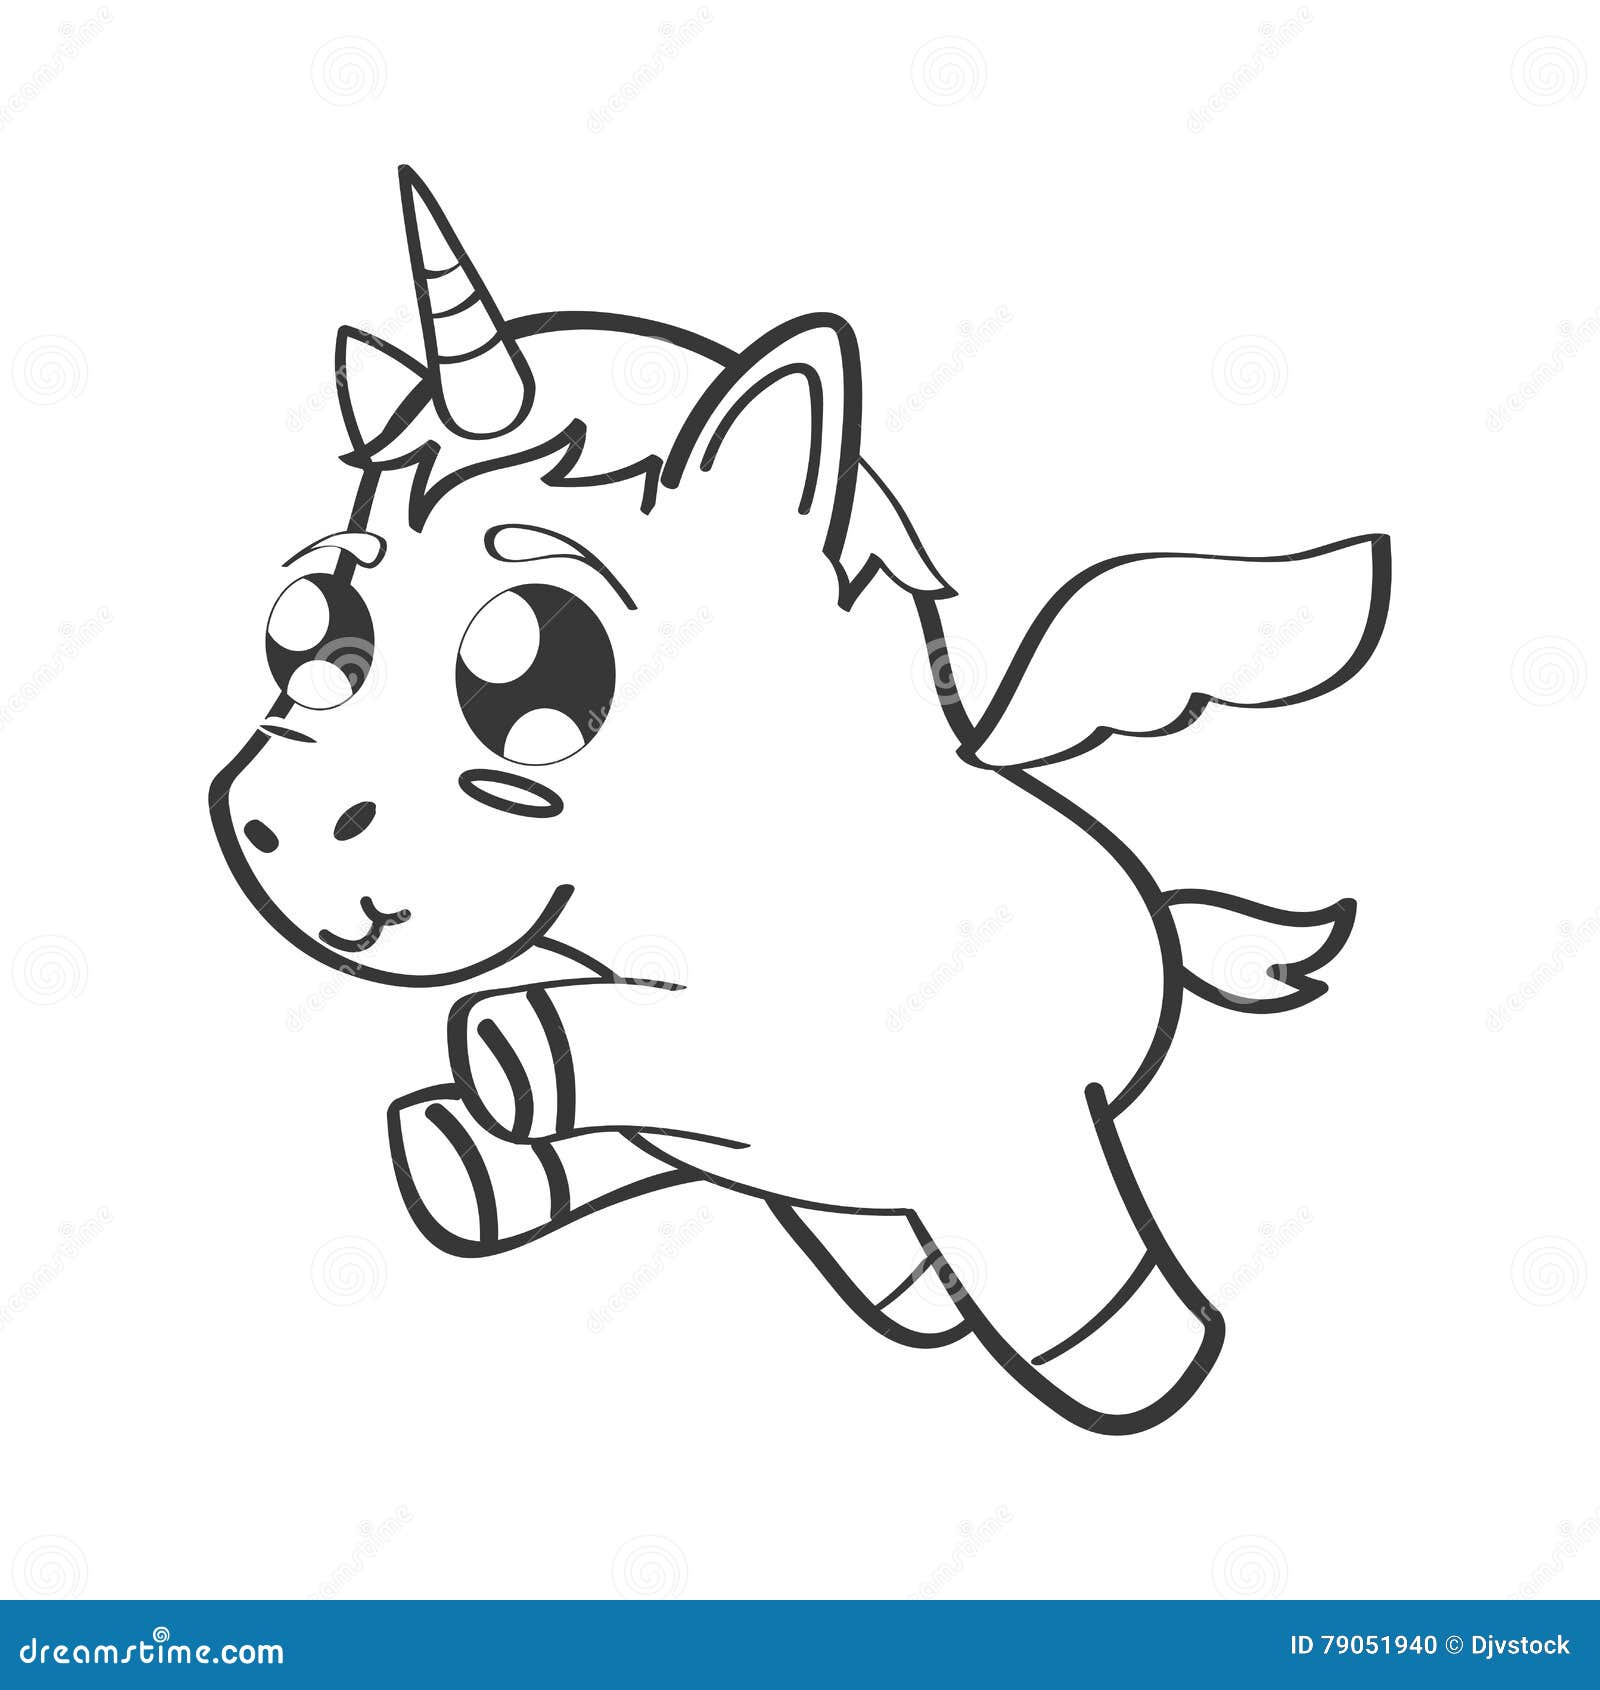 cute unicorn drawn icon stock vector illustration of